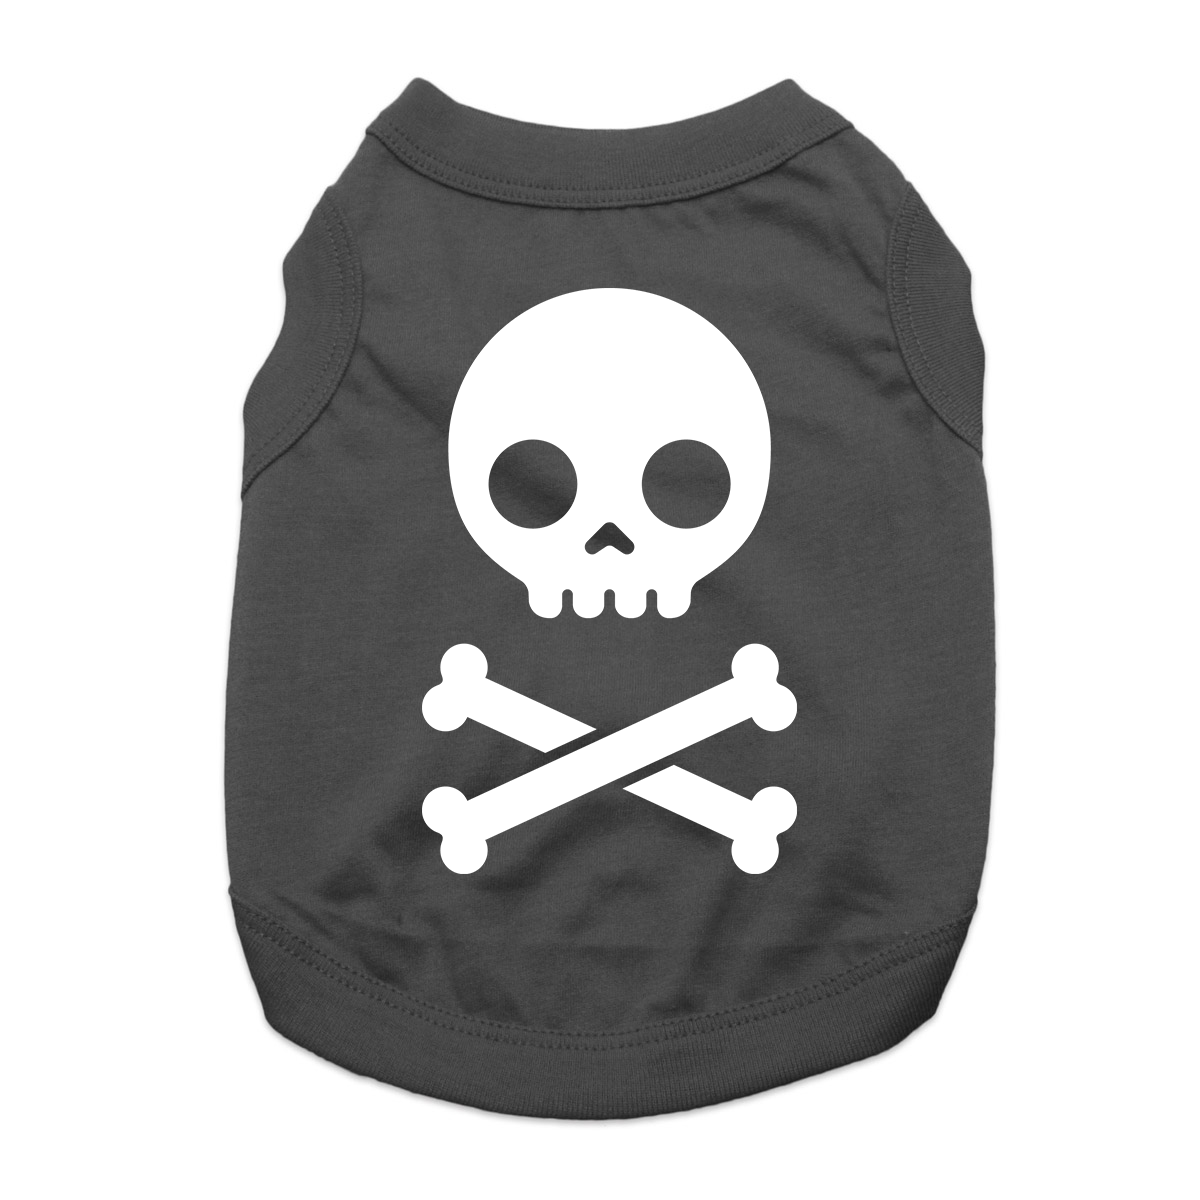 Skull and Bones Dog Shirt - Black